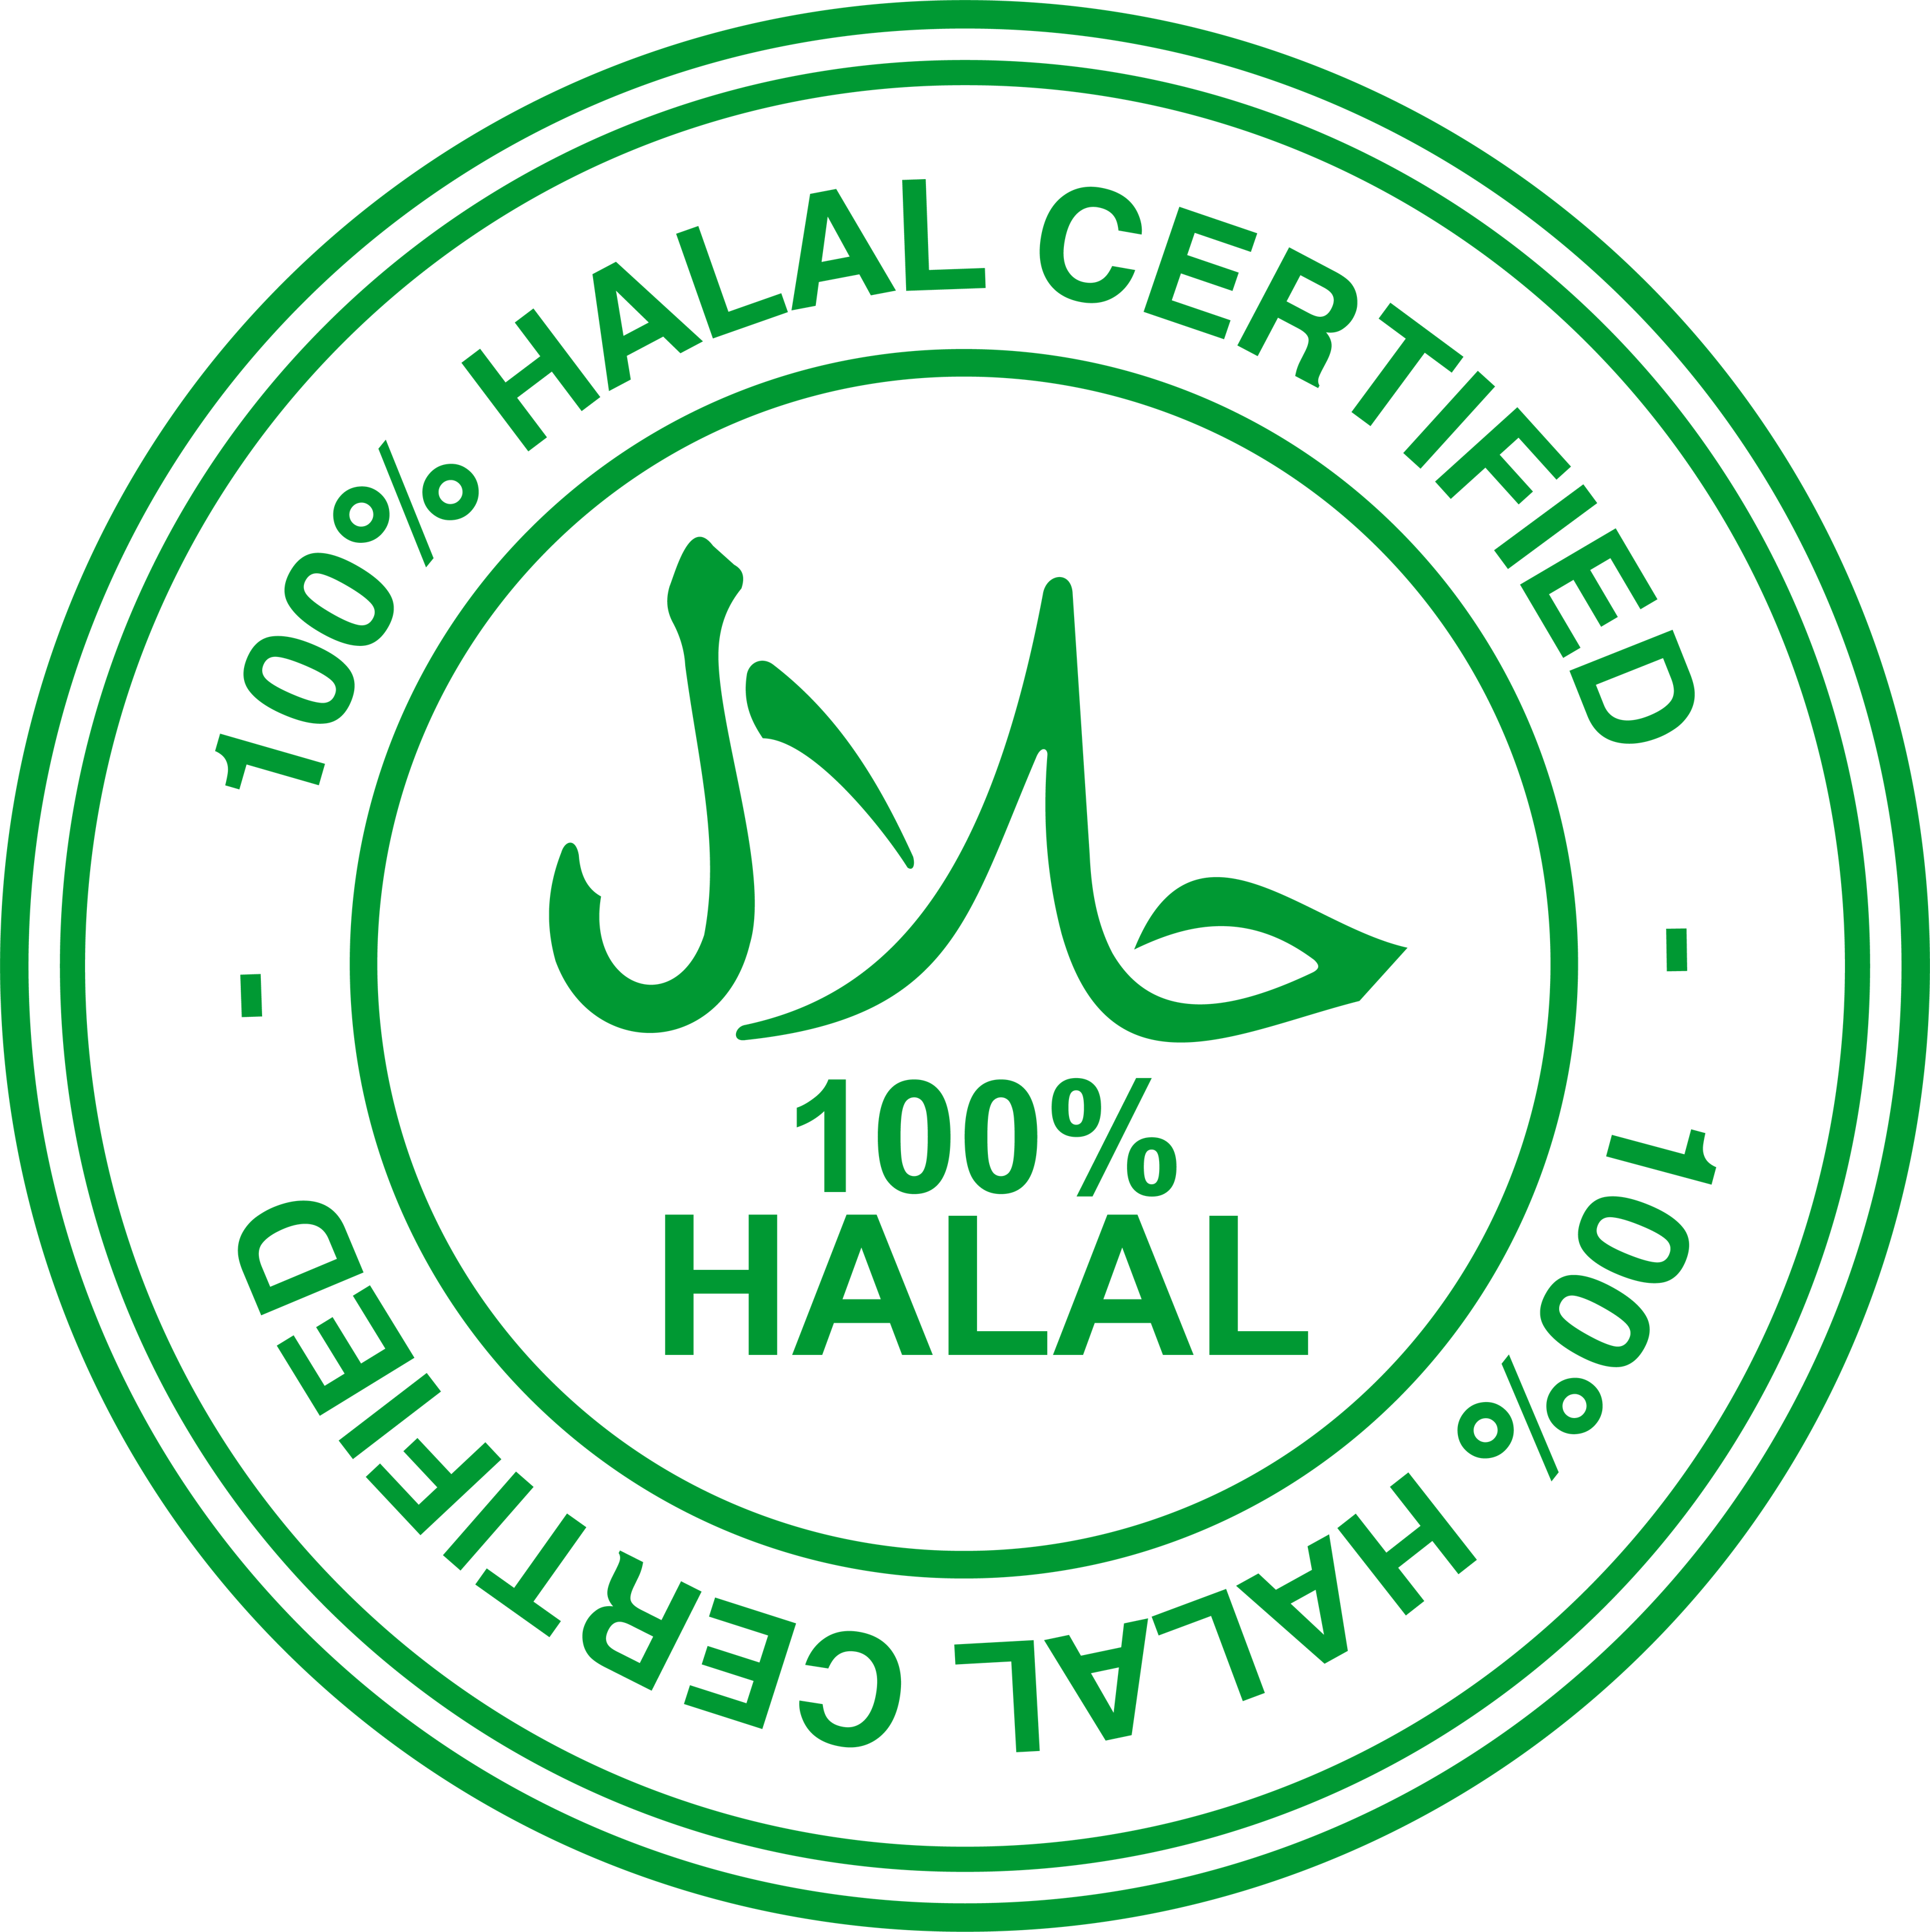 Halal Certified 